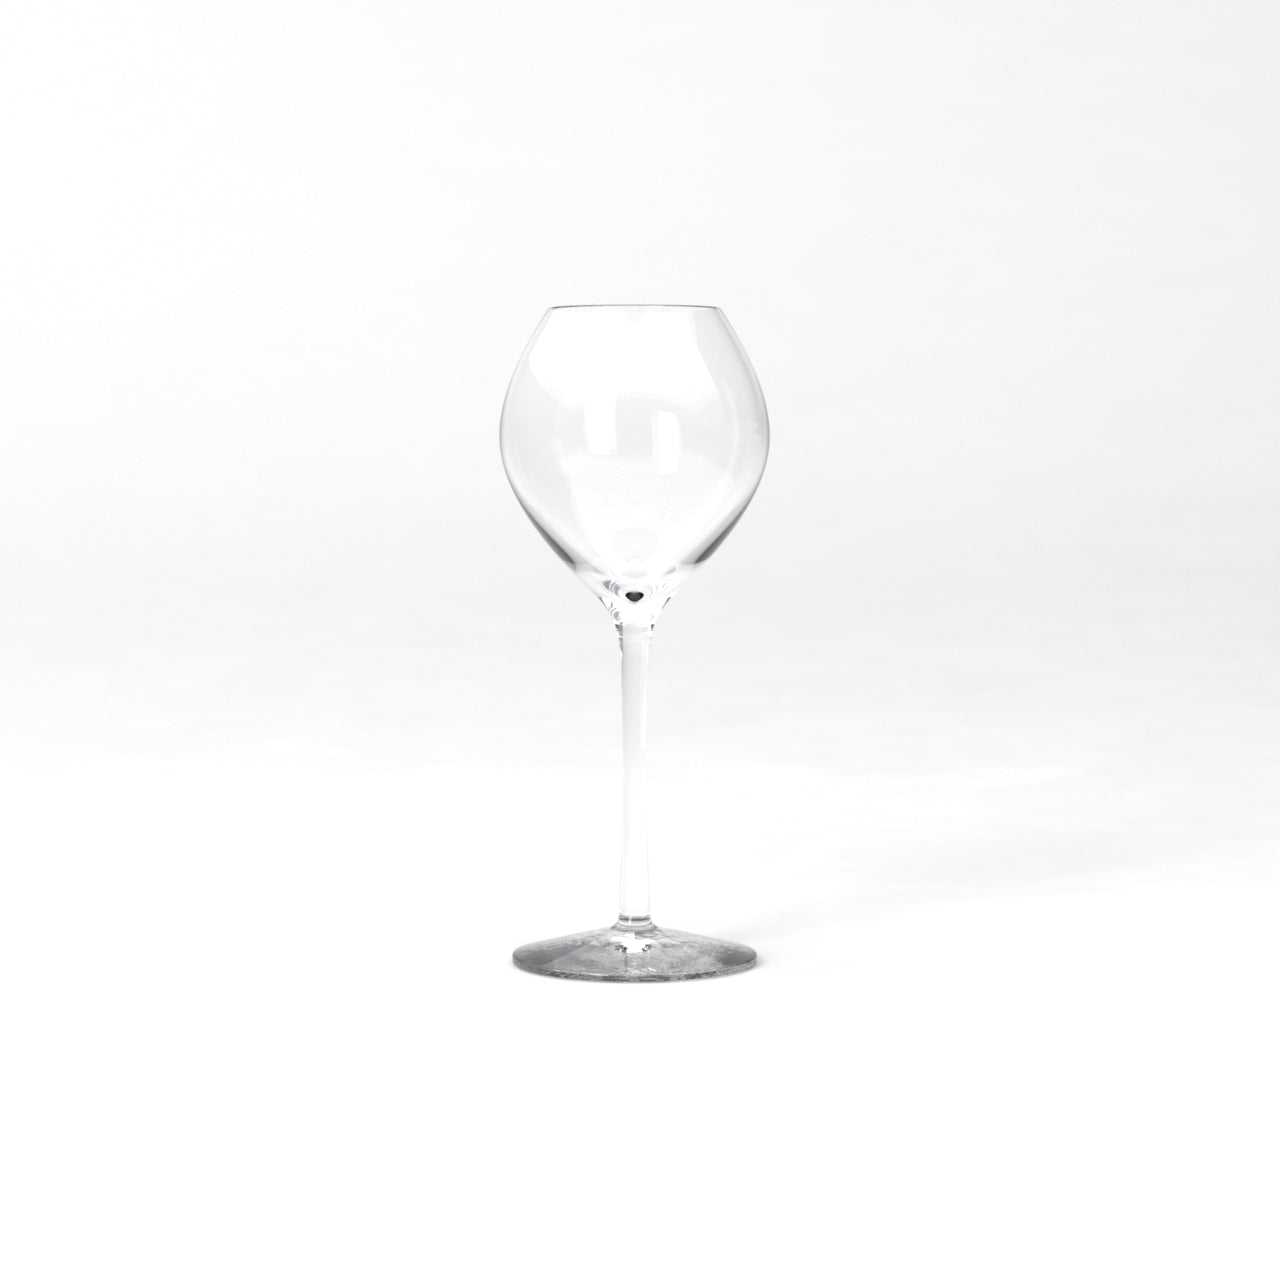 Richard Juhlin dessert wine glass